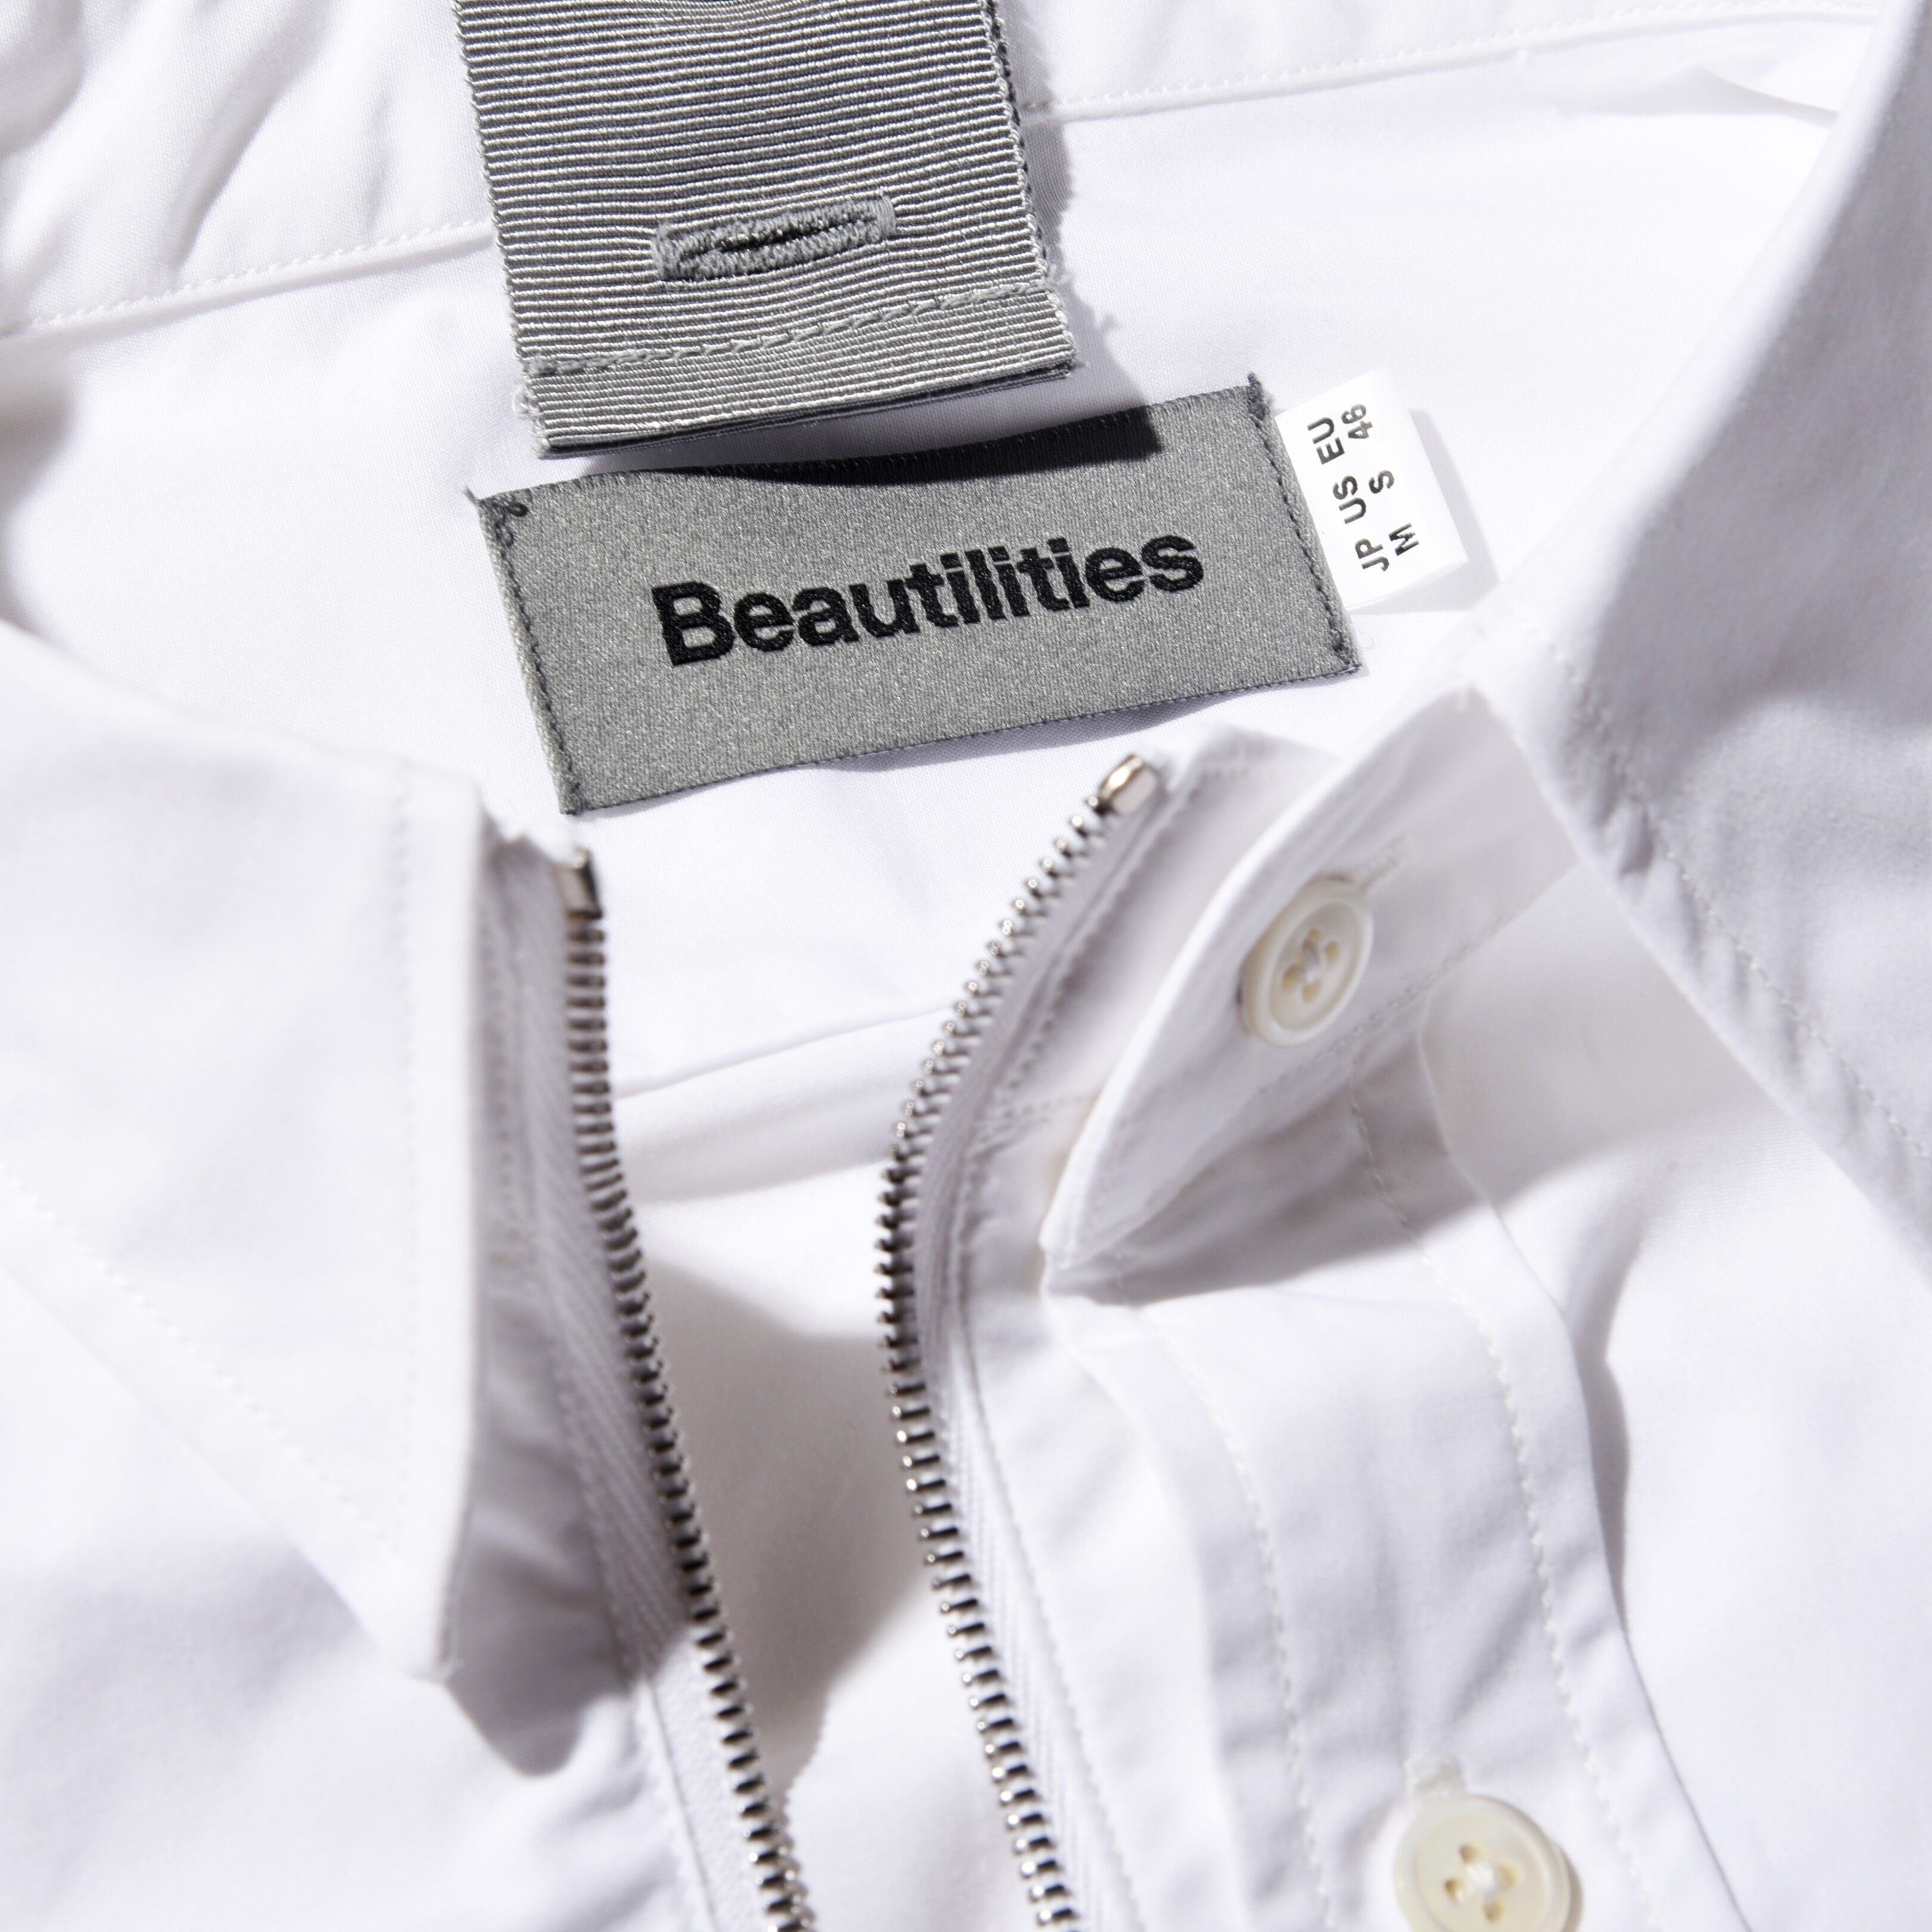 HOLYASTERISK 将首度携手 Beautilities 推出限量联名系列